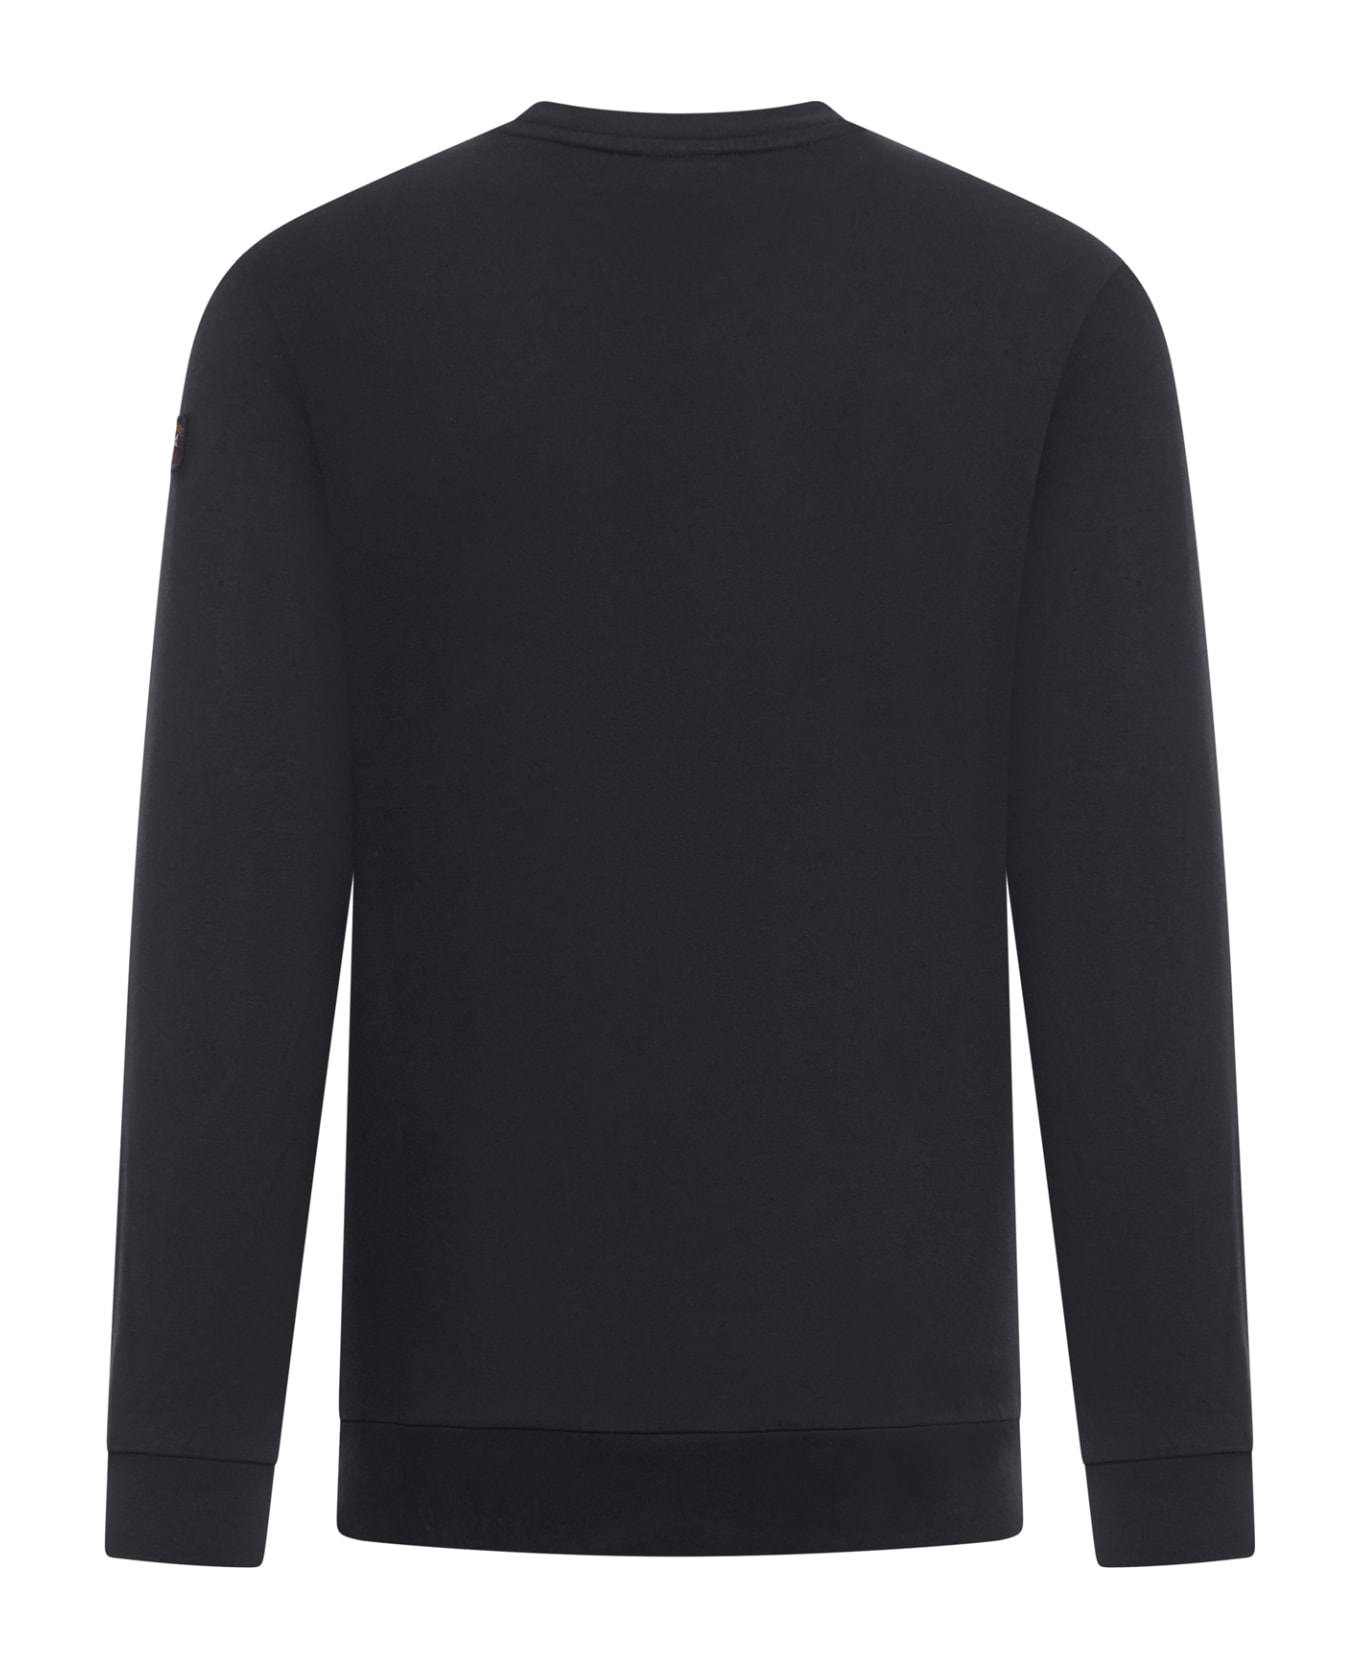 Paul&Shark Sweatshirt Cotton - Black フリース